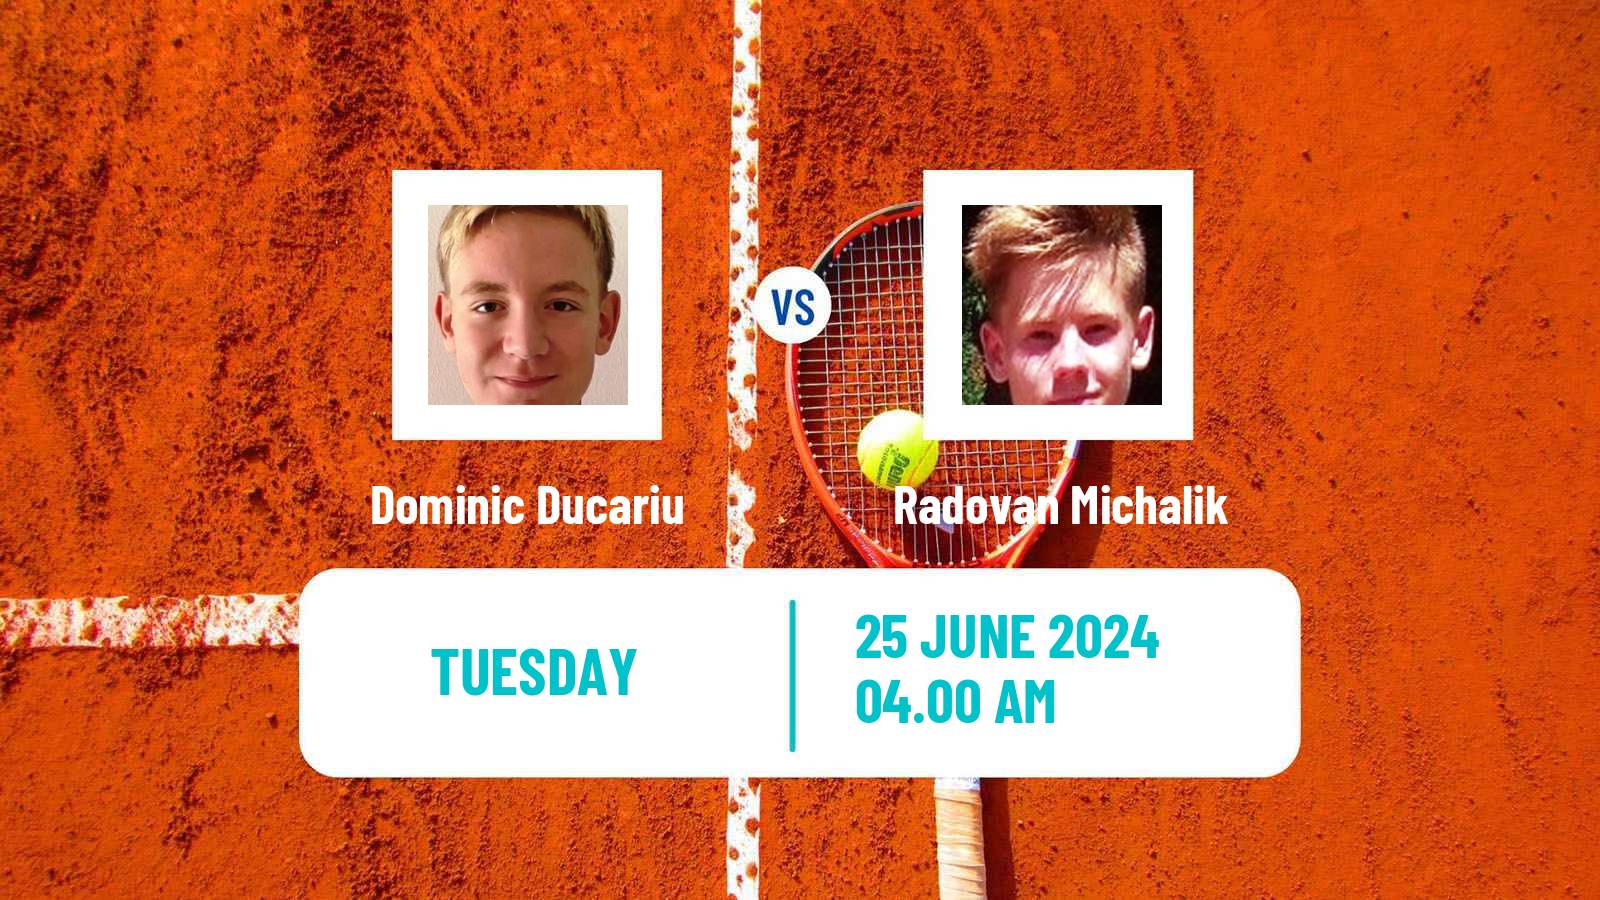 Tennis ITF M25 Satu Mare Men Dominic Ducariu - Radovan Michalik